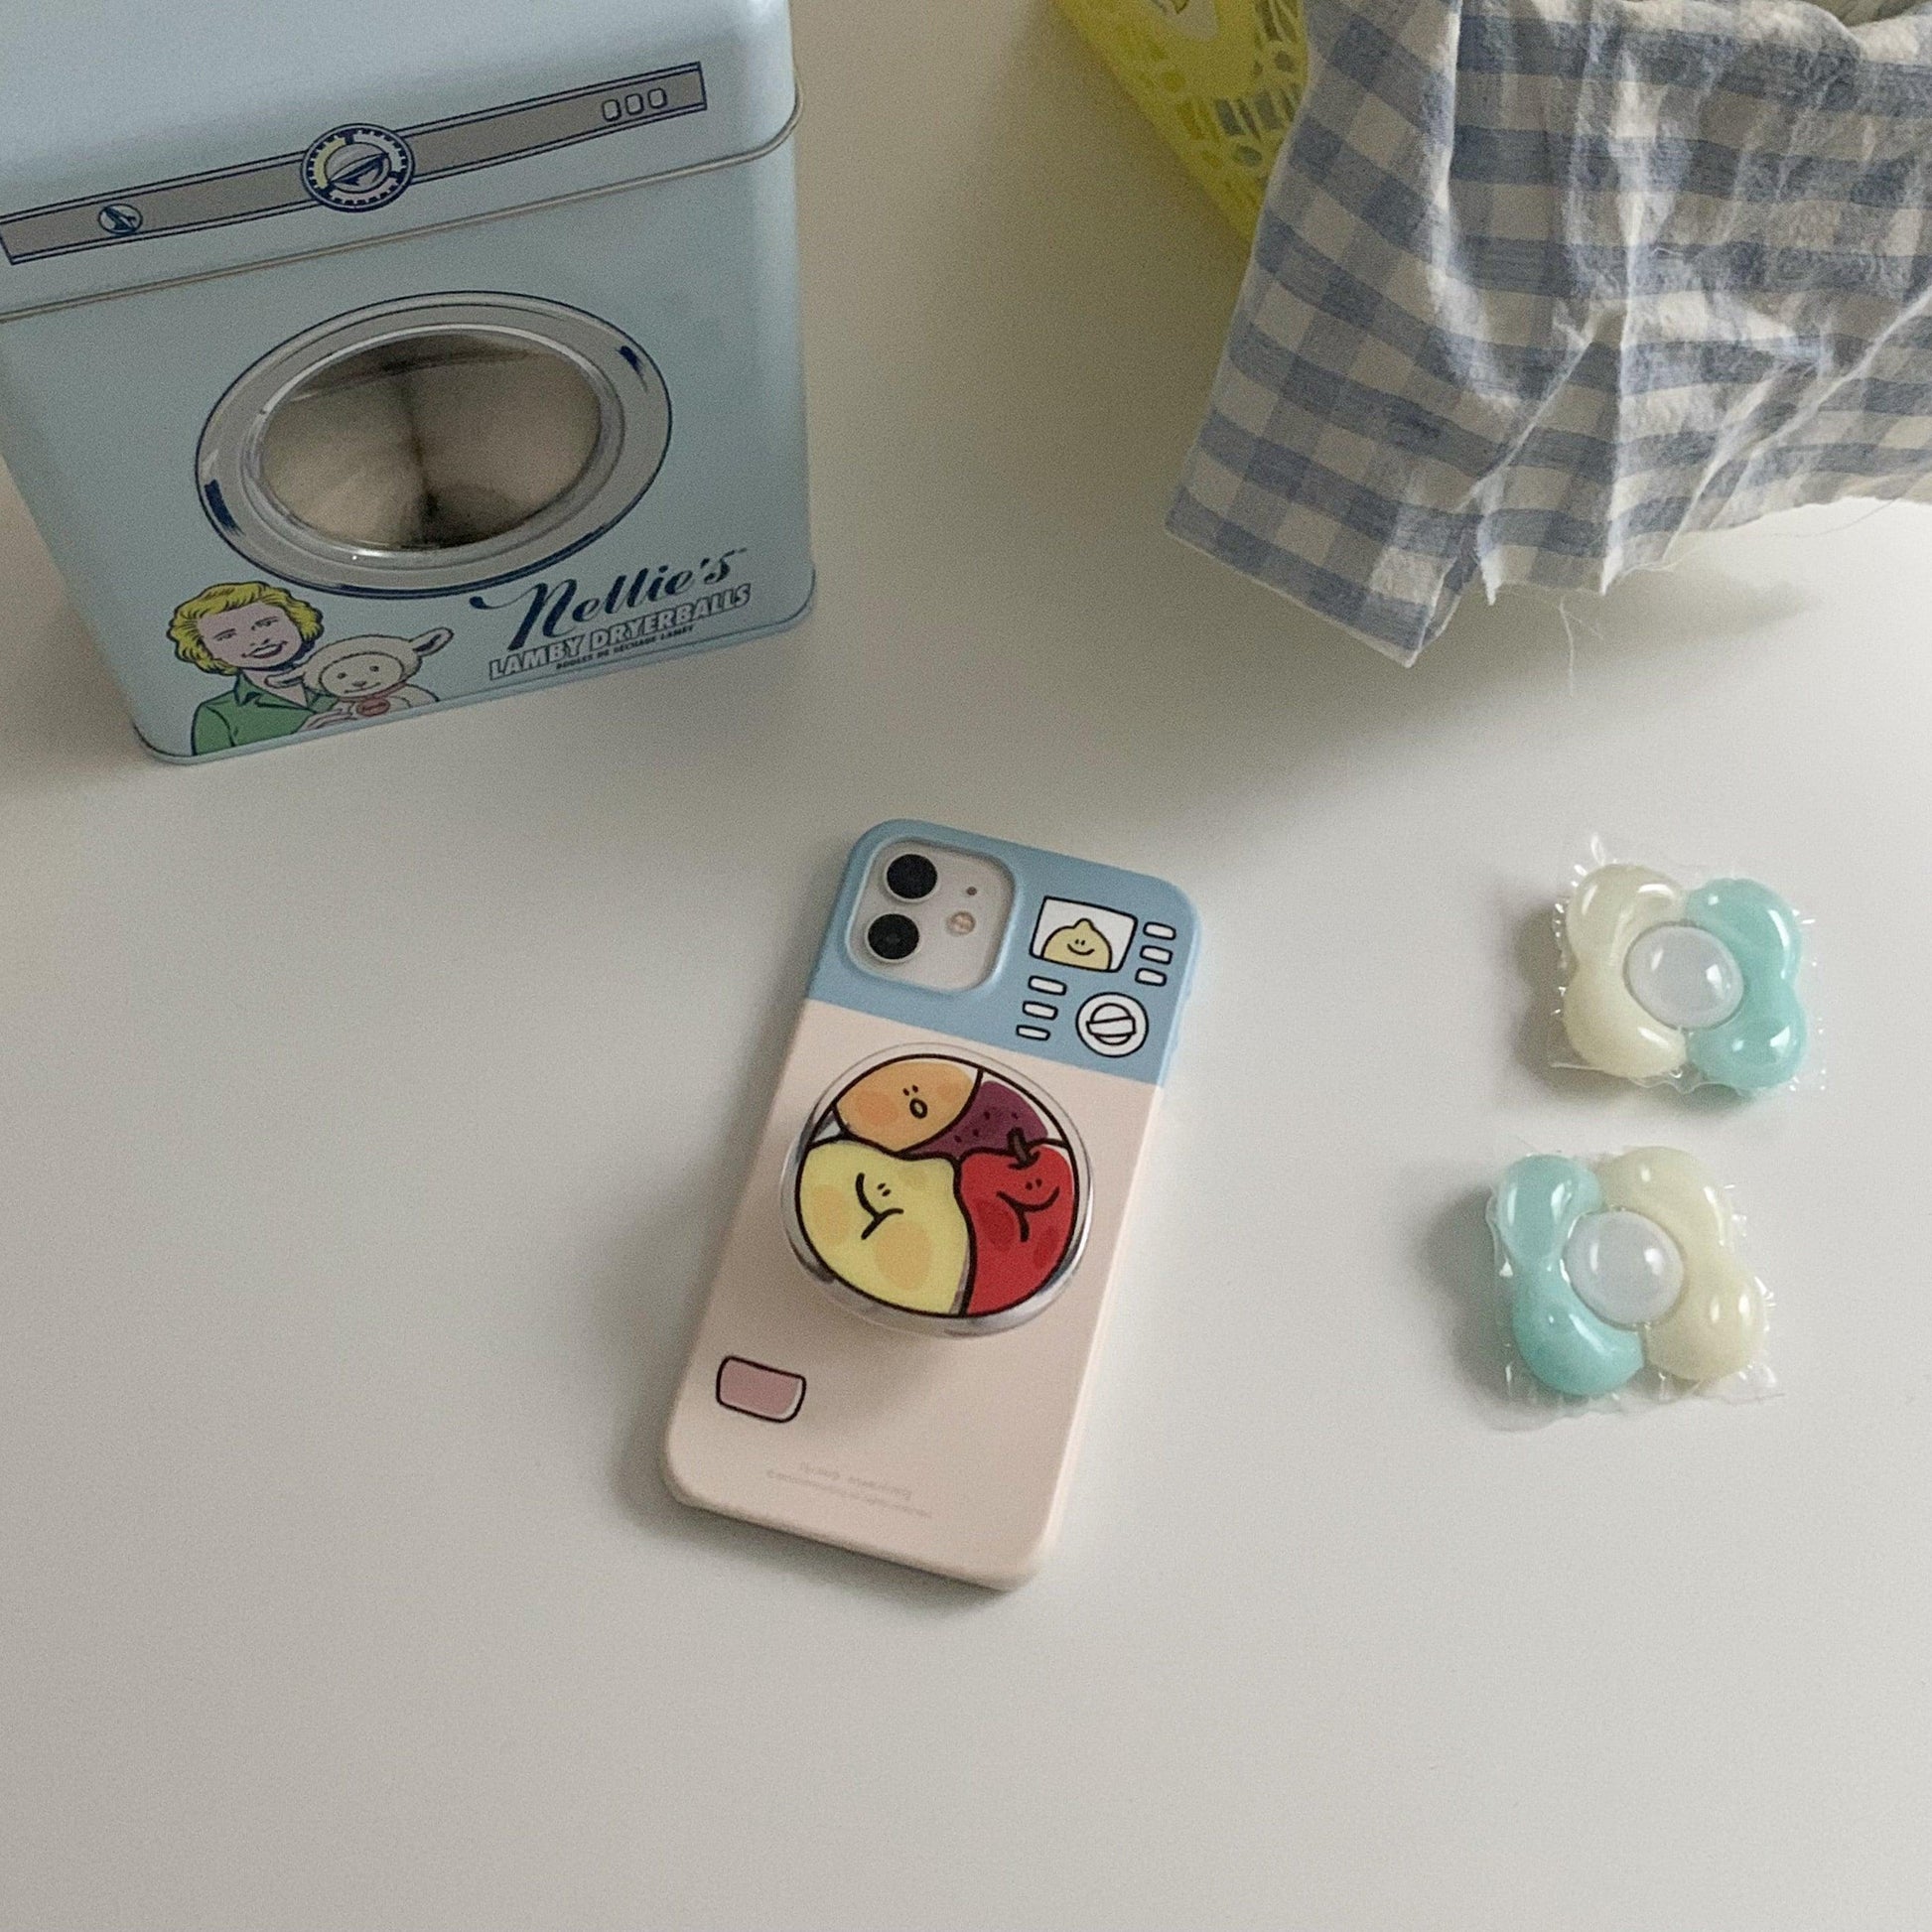 Second Morning Laundry Acrylic Grip Tok 手機支架 - SOUL SIMPLE HK